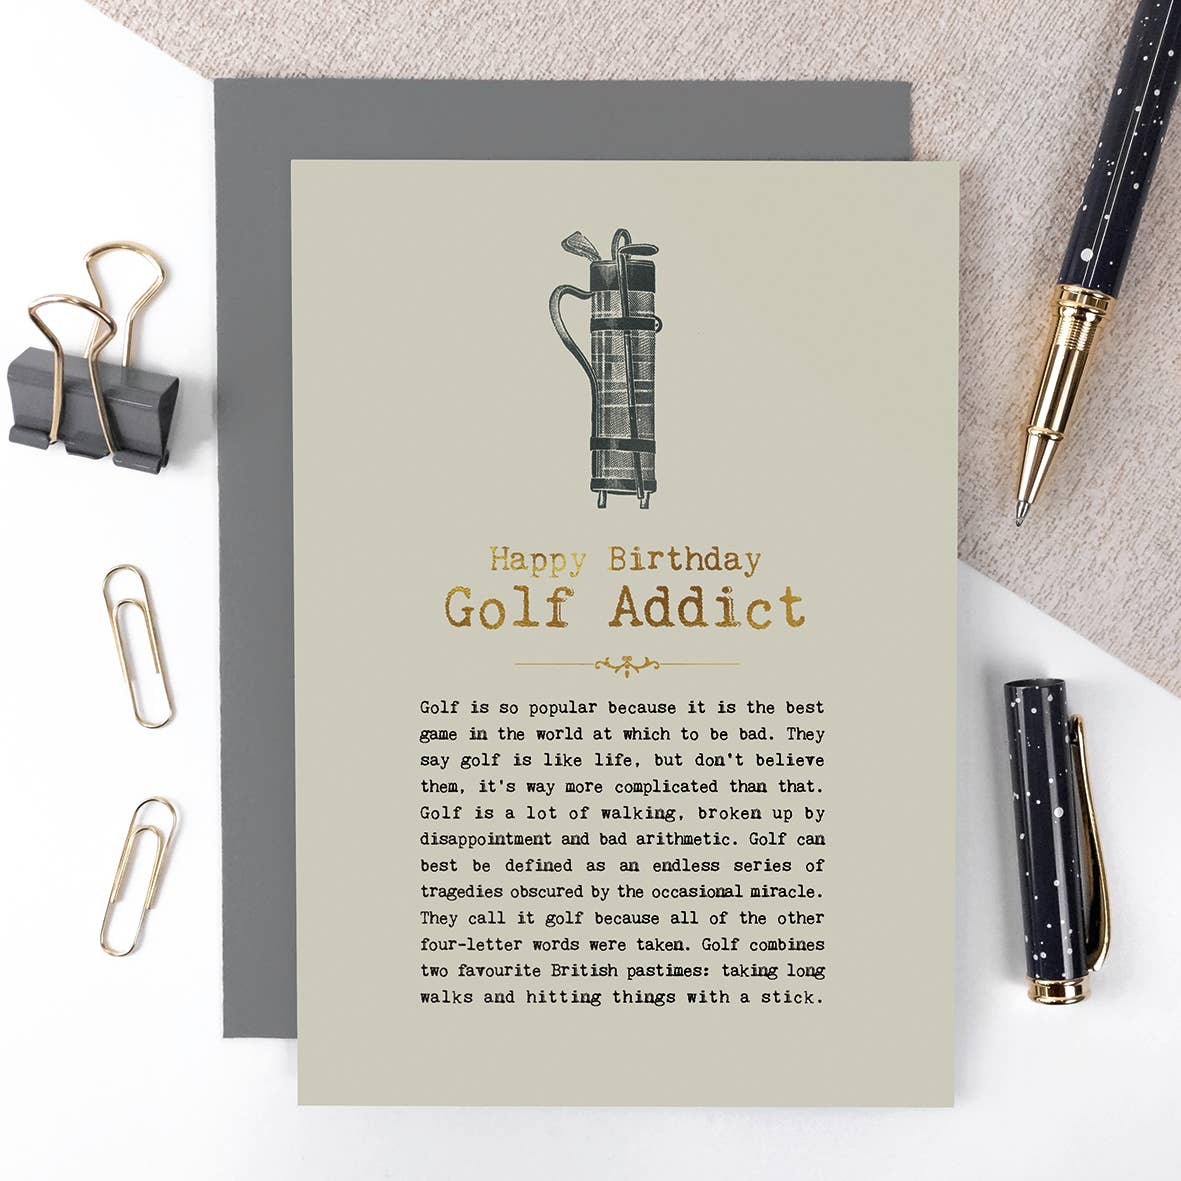 Golf Addict Foiled Birthday Card